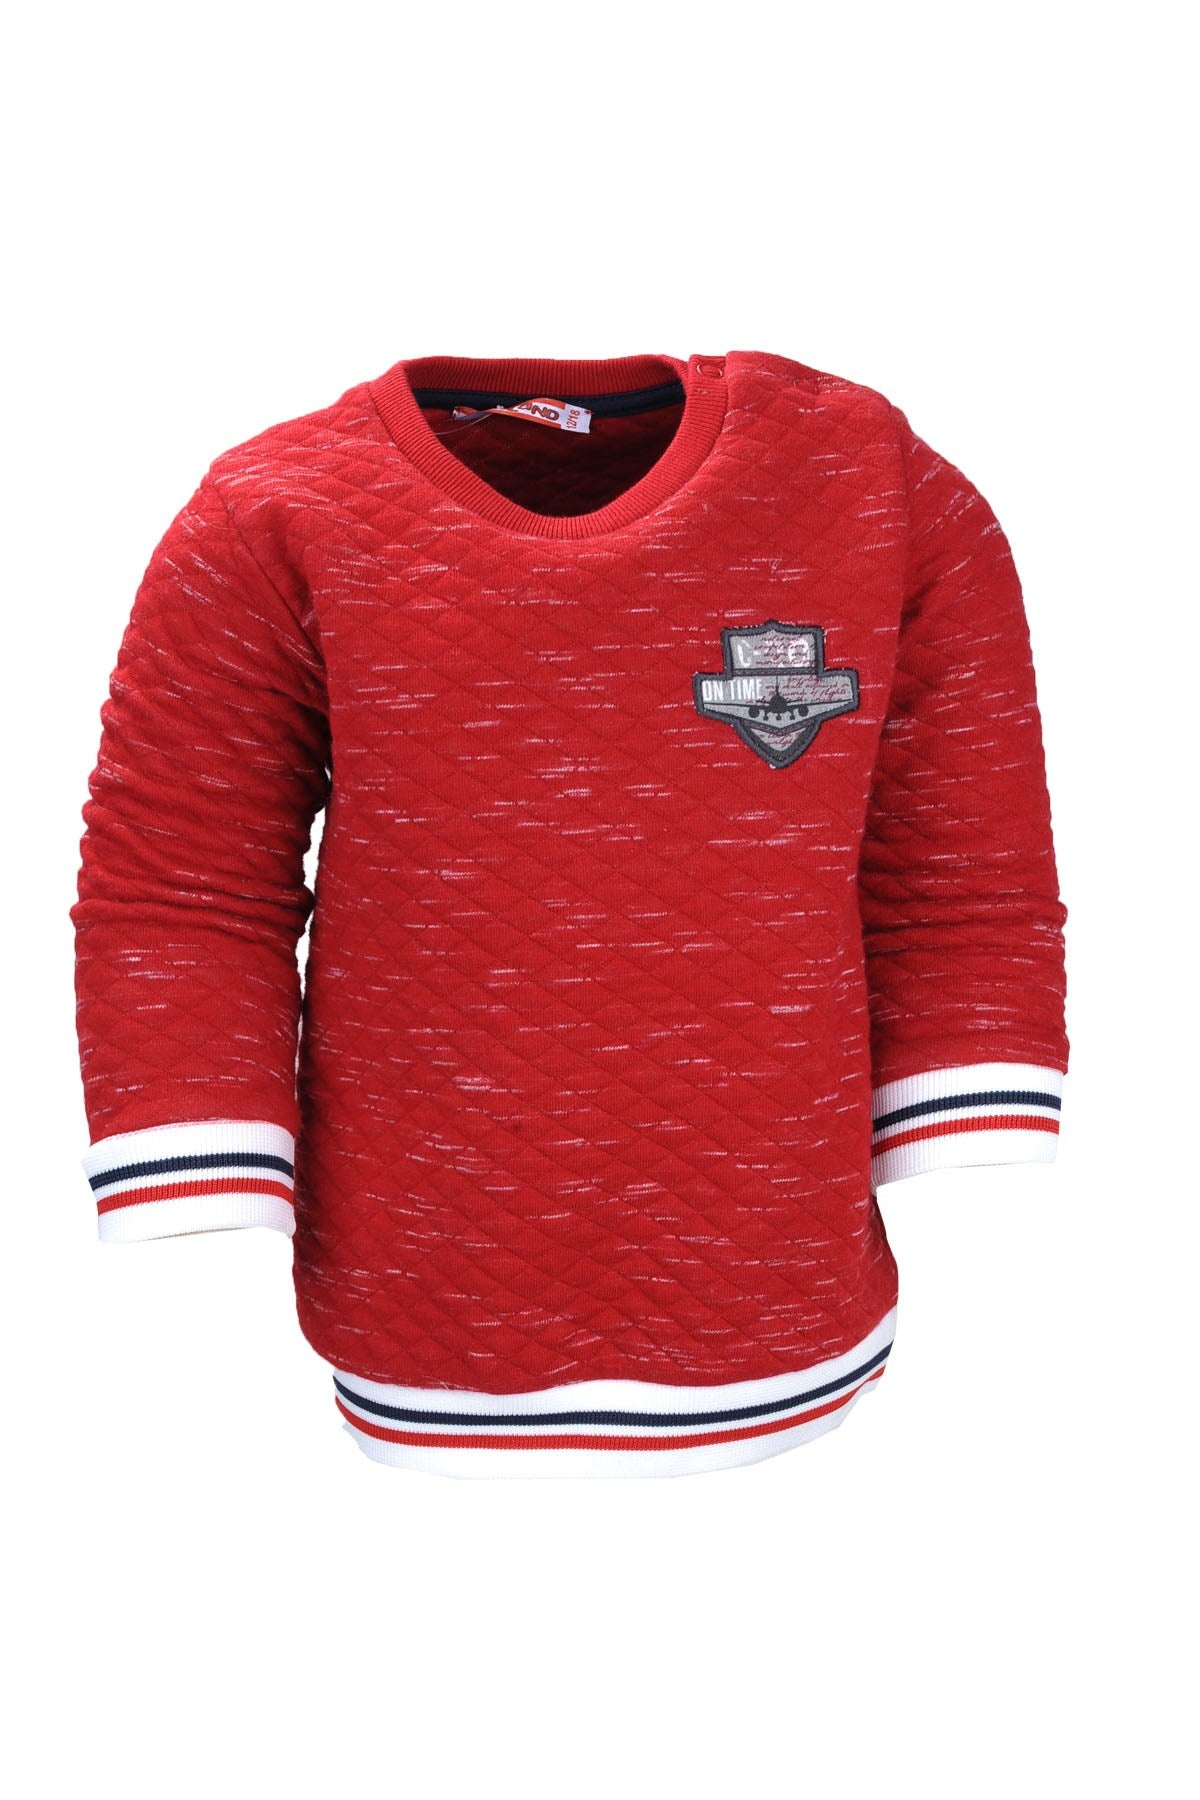 Erkek Bebek Kırmızı Sweatshirt (9ay-4yaş)-0